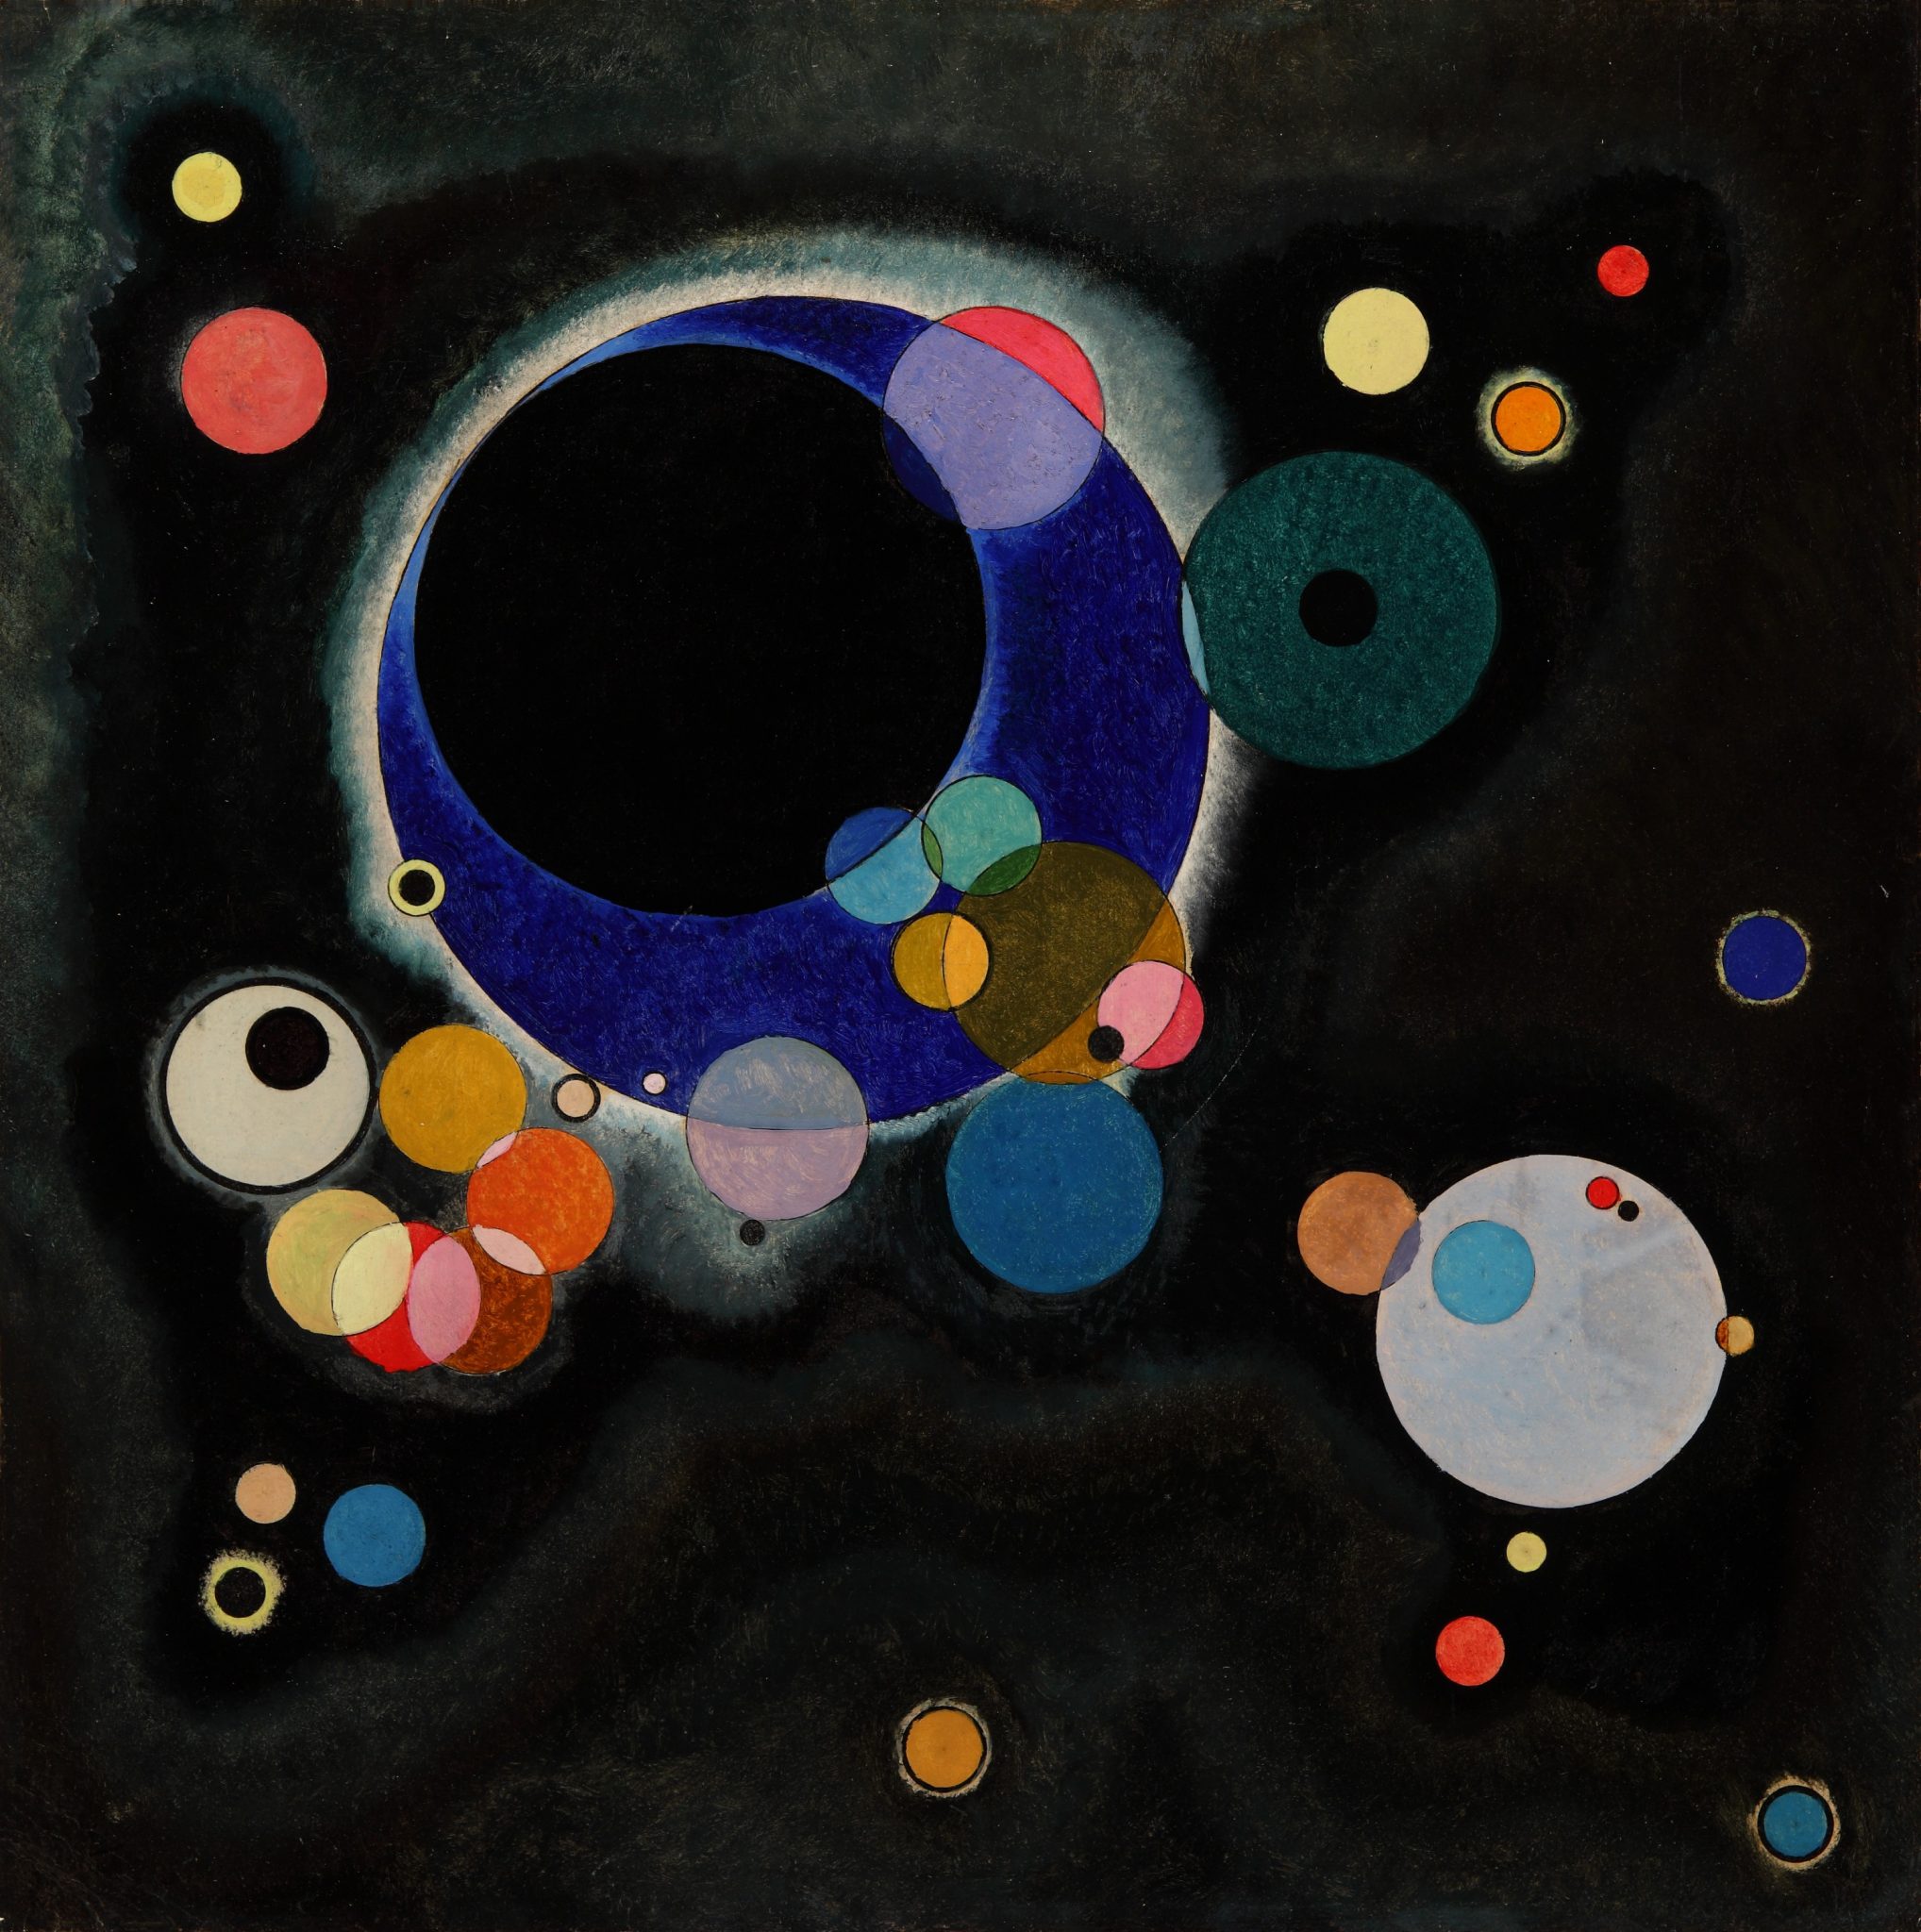 Kandinsky Inspired Black Canvas Painting Tutorial